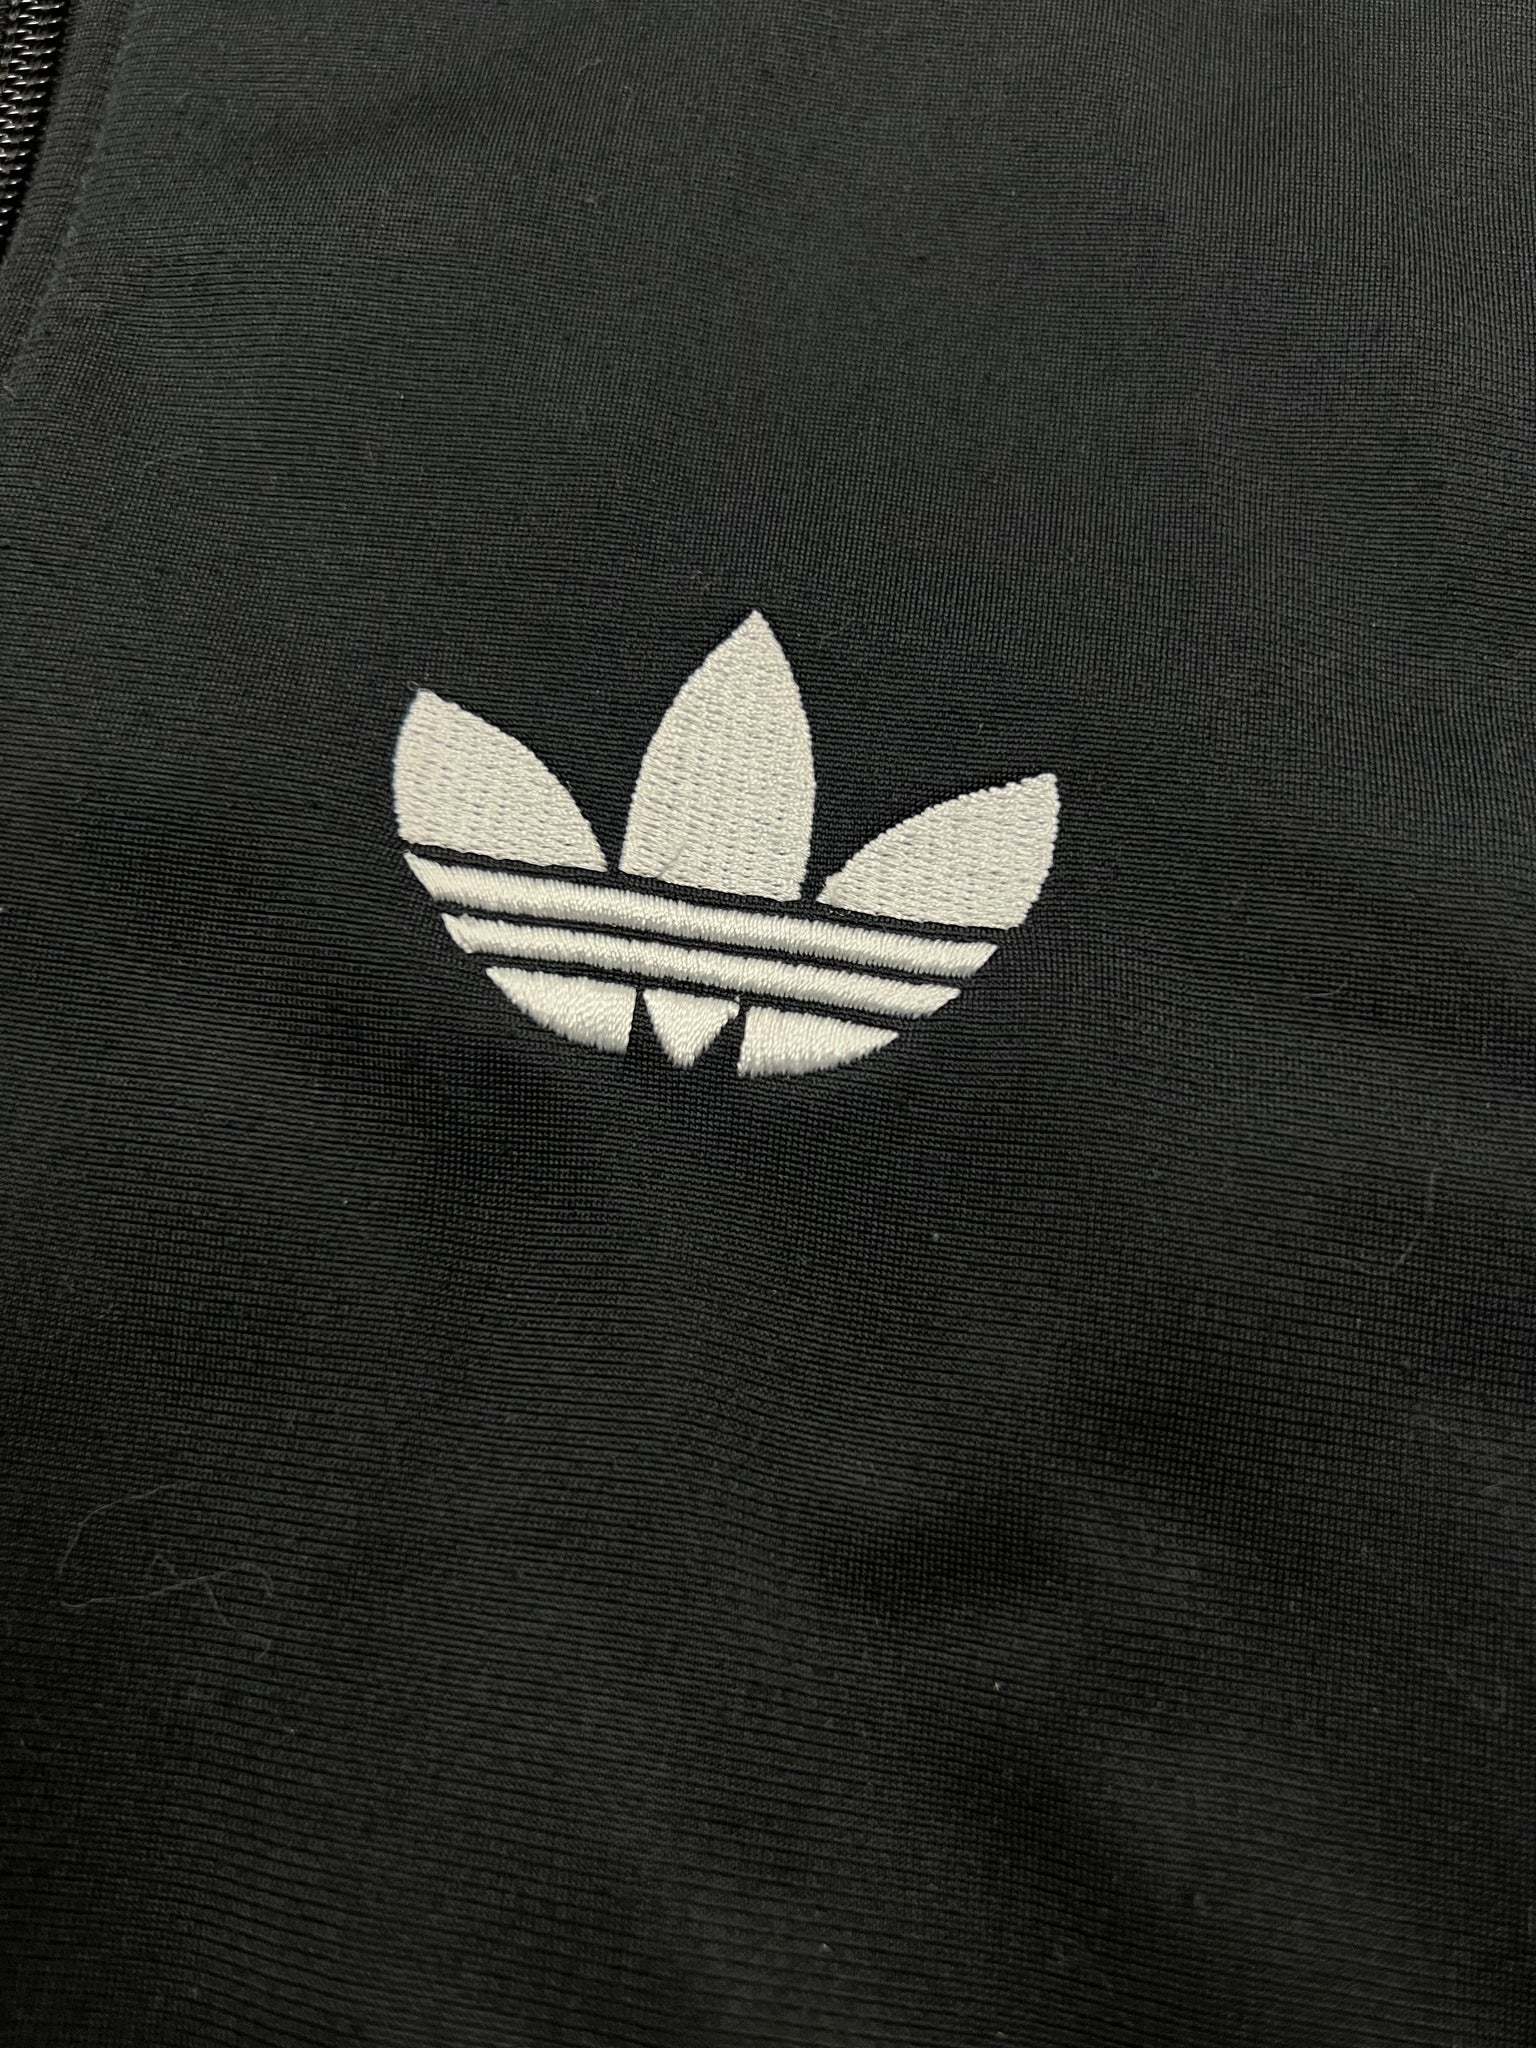 Adidas Track Jacket (S)